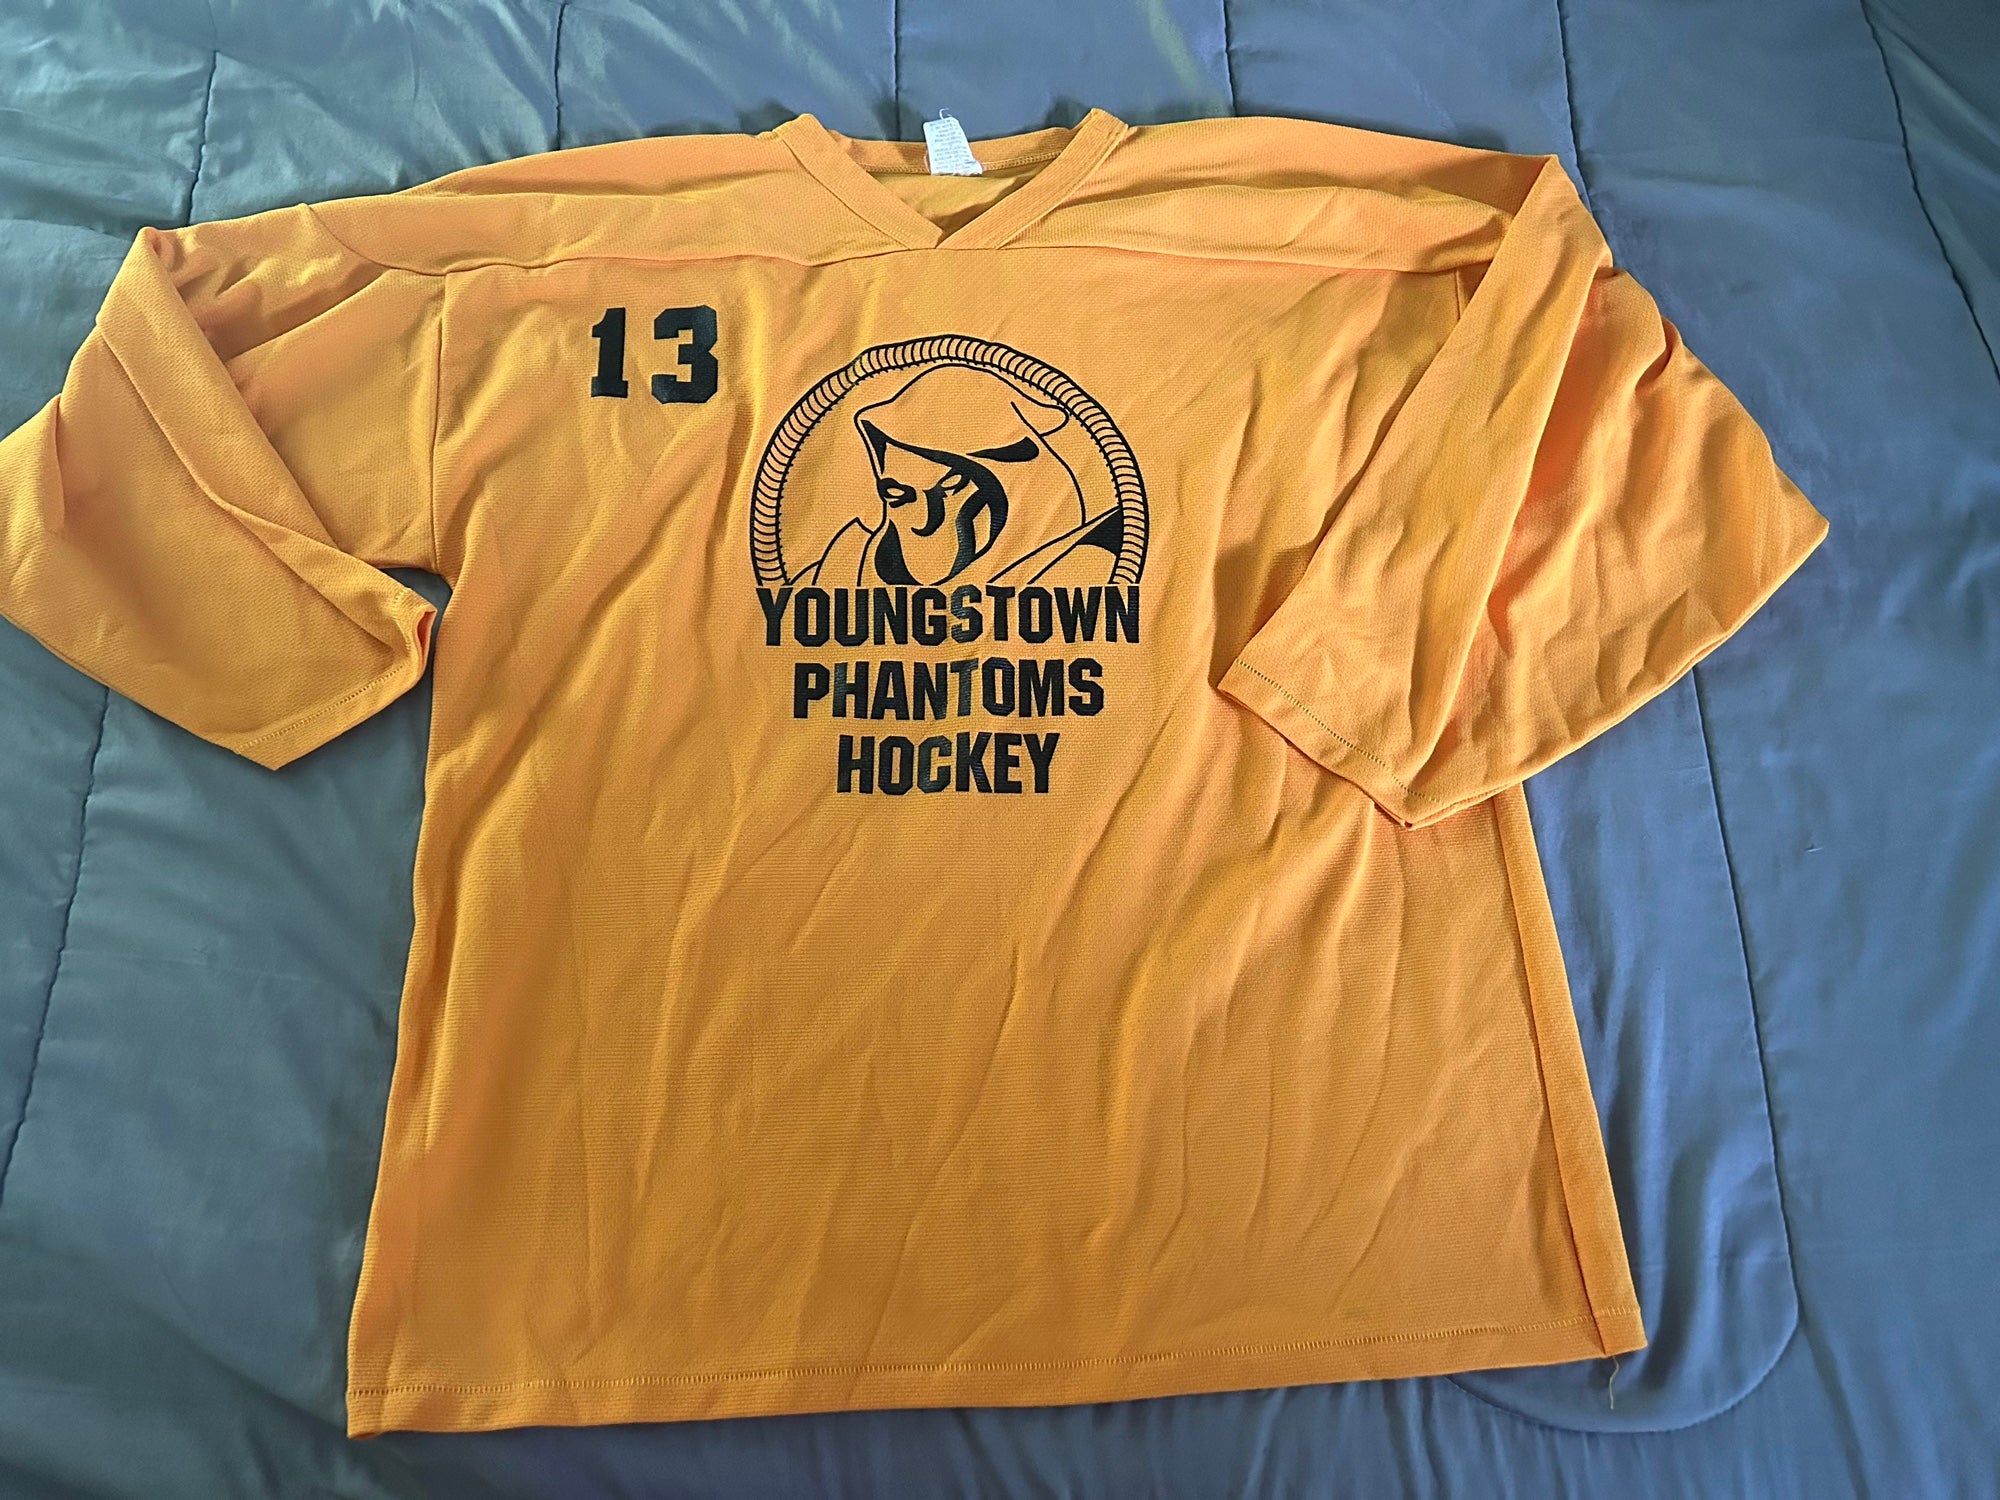 Youngstown phantoms USHL Reebok practice jersey adult large